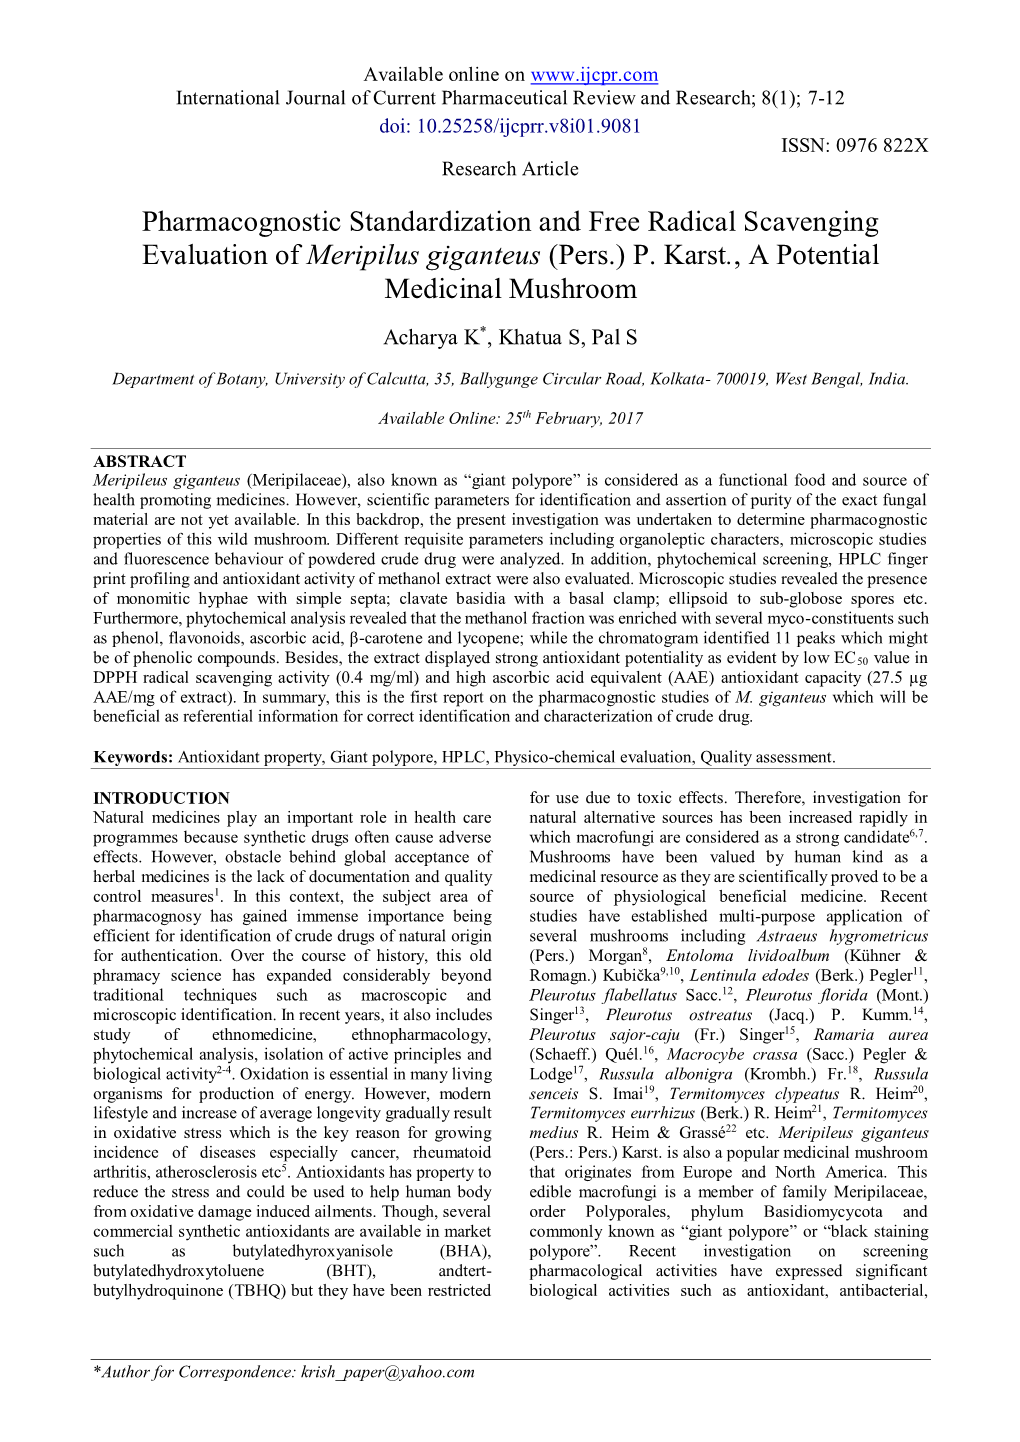 Pharmacognostic Standardization and Free Radical Scavenging Evaluation of Meripilus Giganteus (Pers.) P